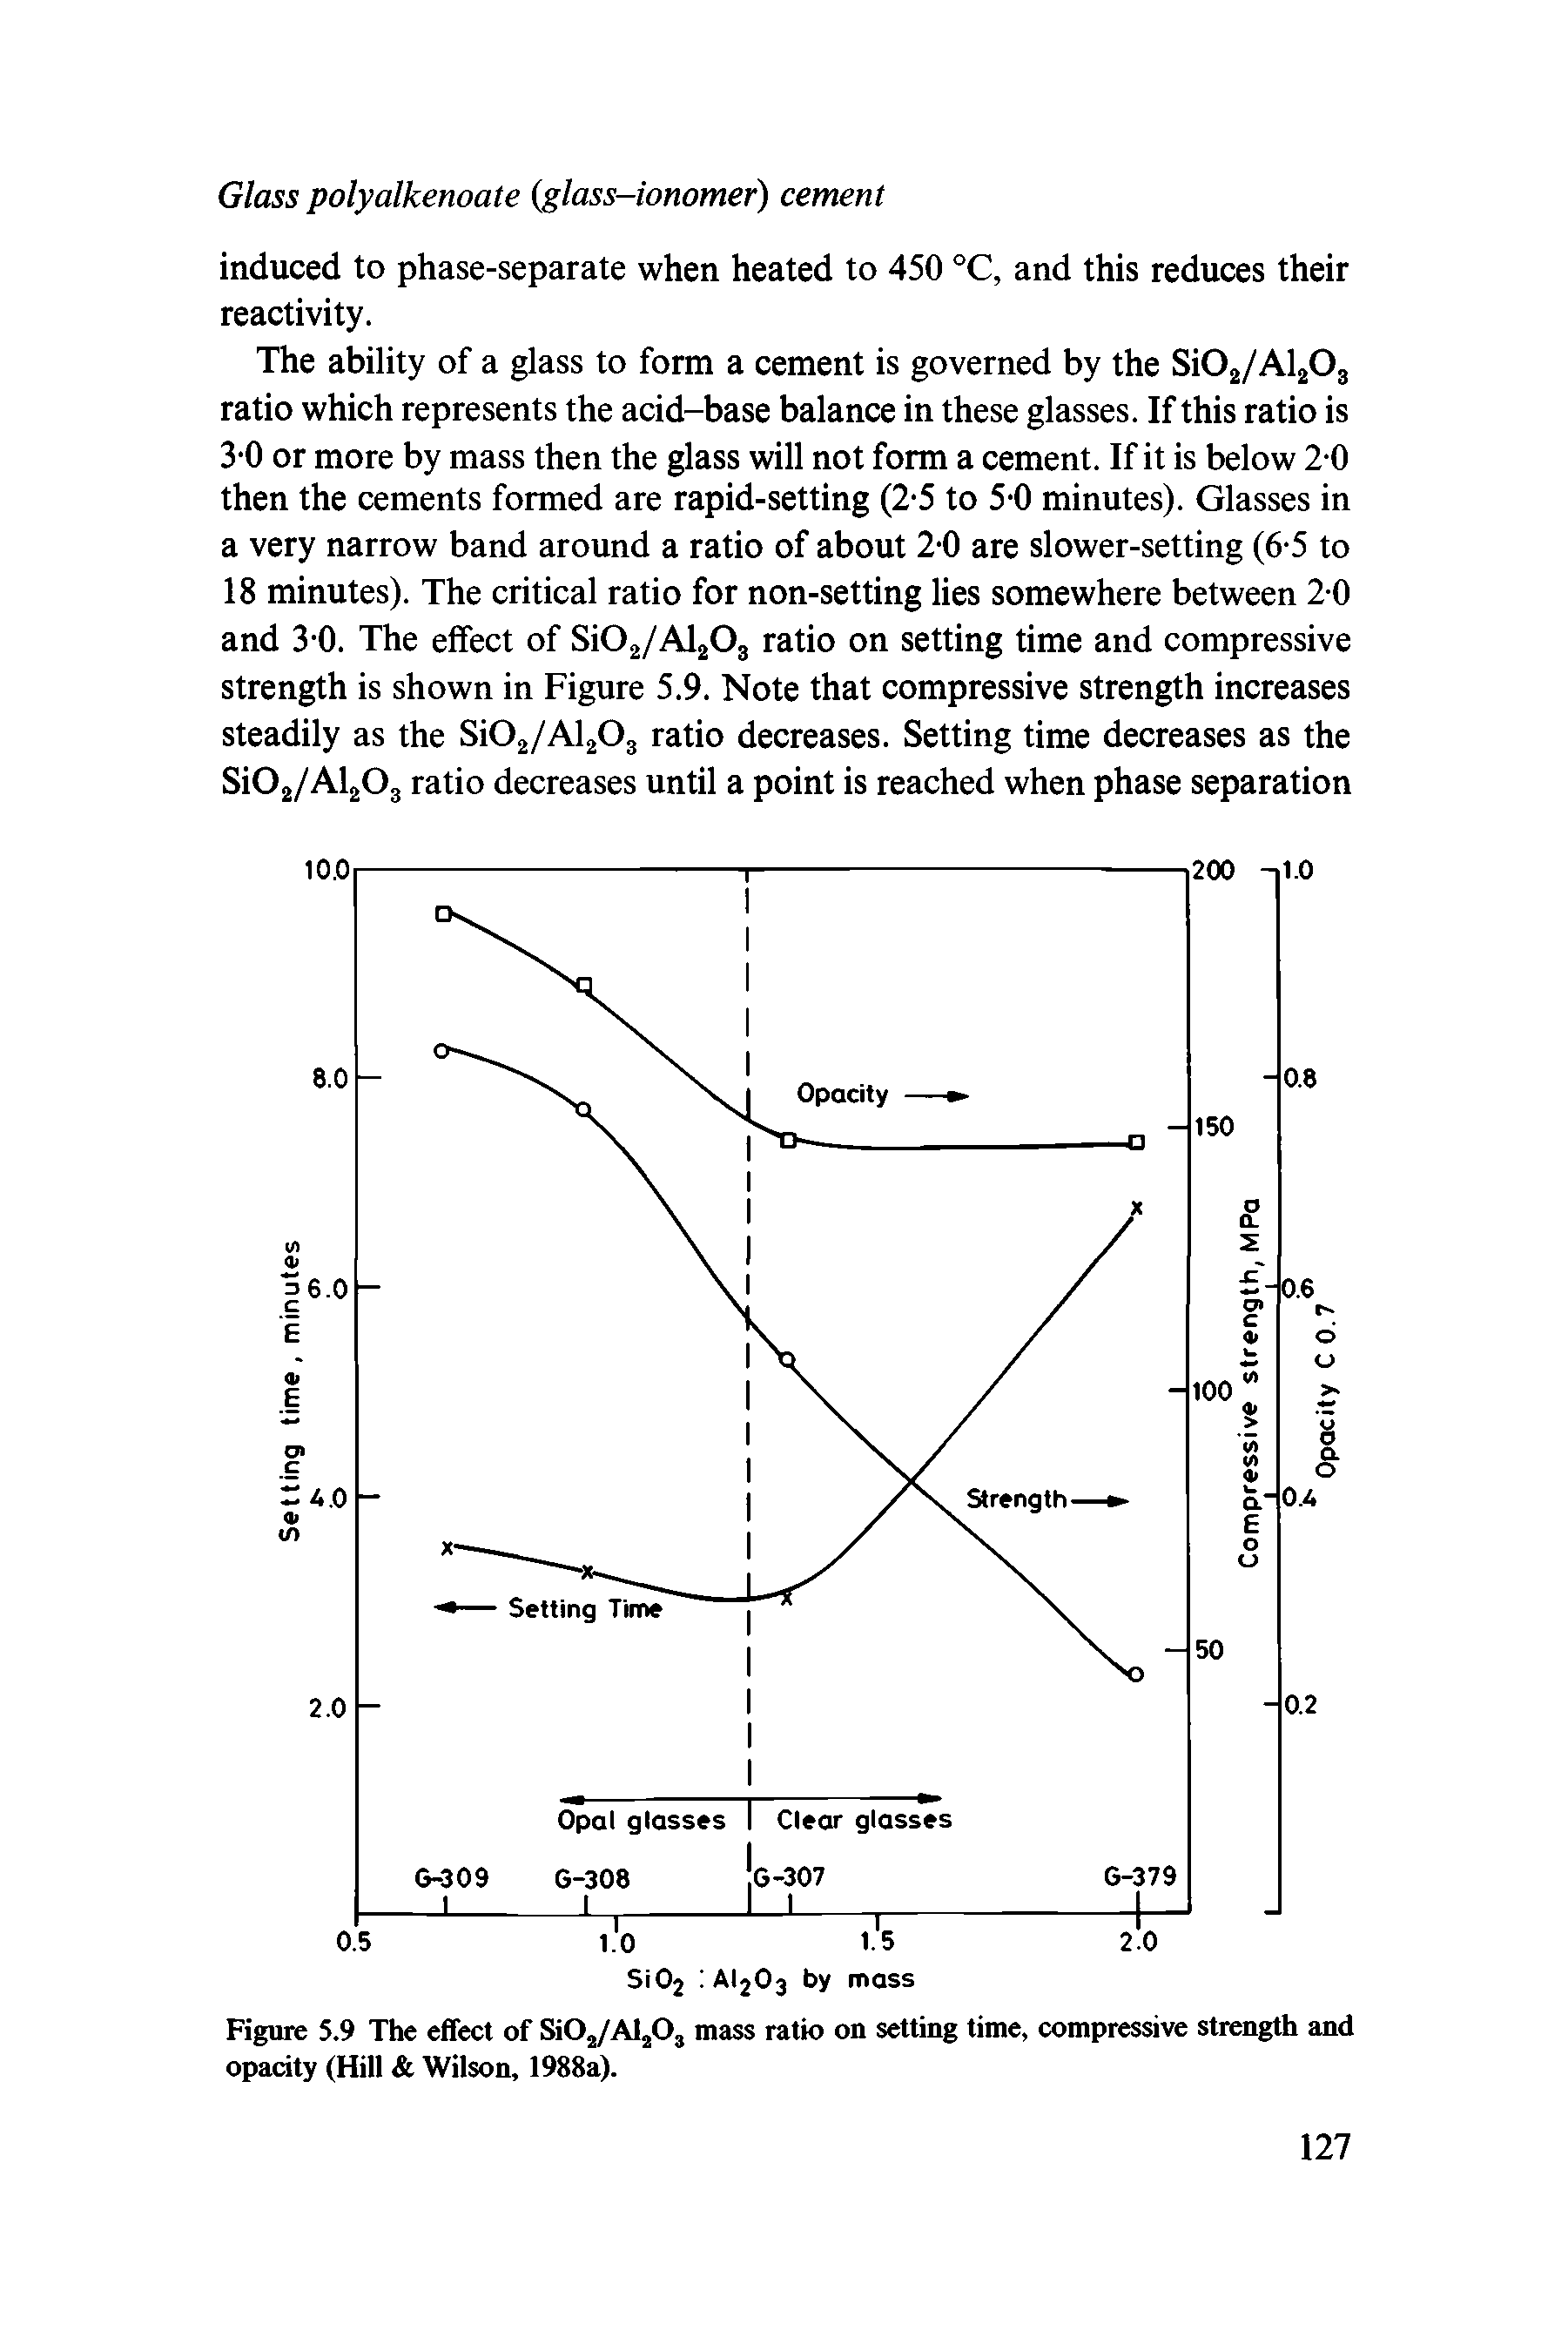 Figure 5.9 The effect of SiOj/AljOj mass ratio on setting time, compressive strength and opacity (Hill Wilson, 1988a).